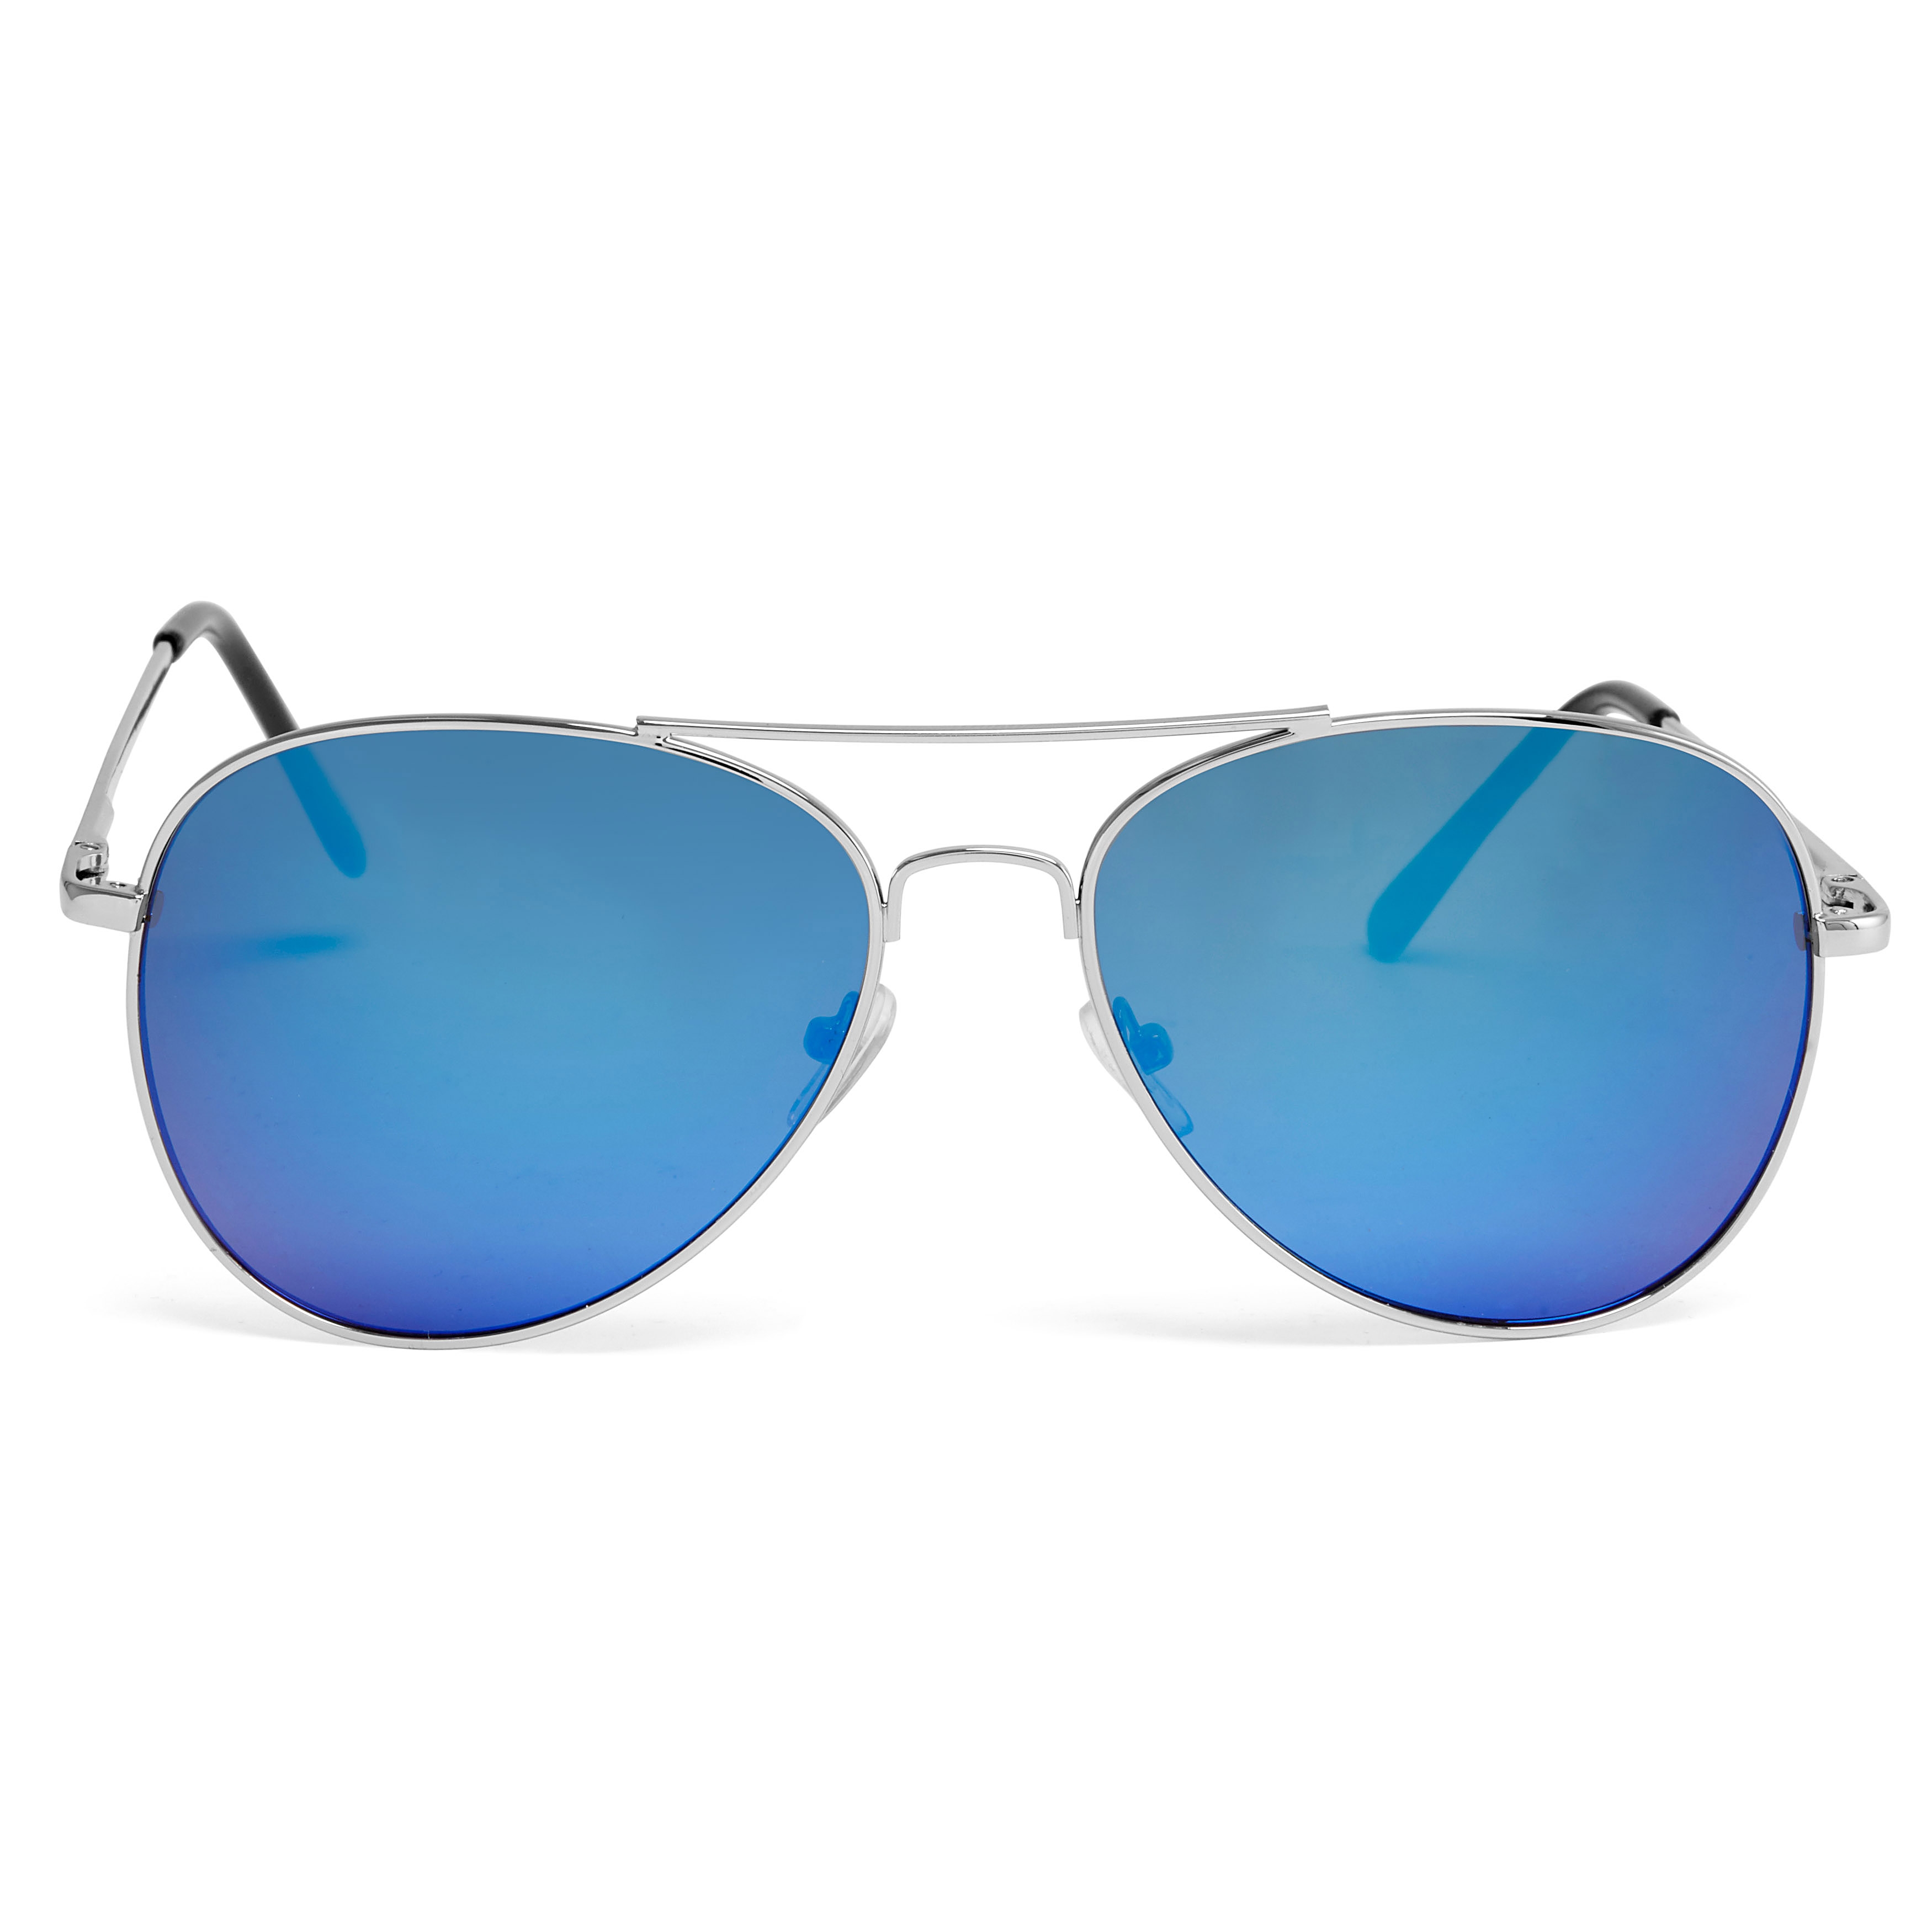 Black and Silver Sunglasses - Mirrored Sunglasses - Matte Sunglasses -  $14.00 - Lulus